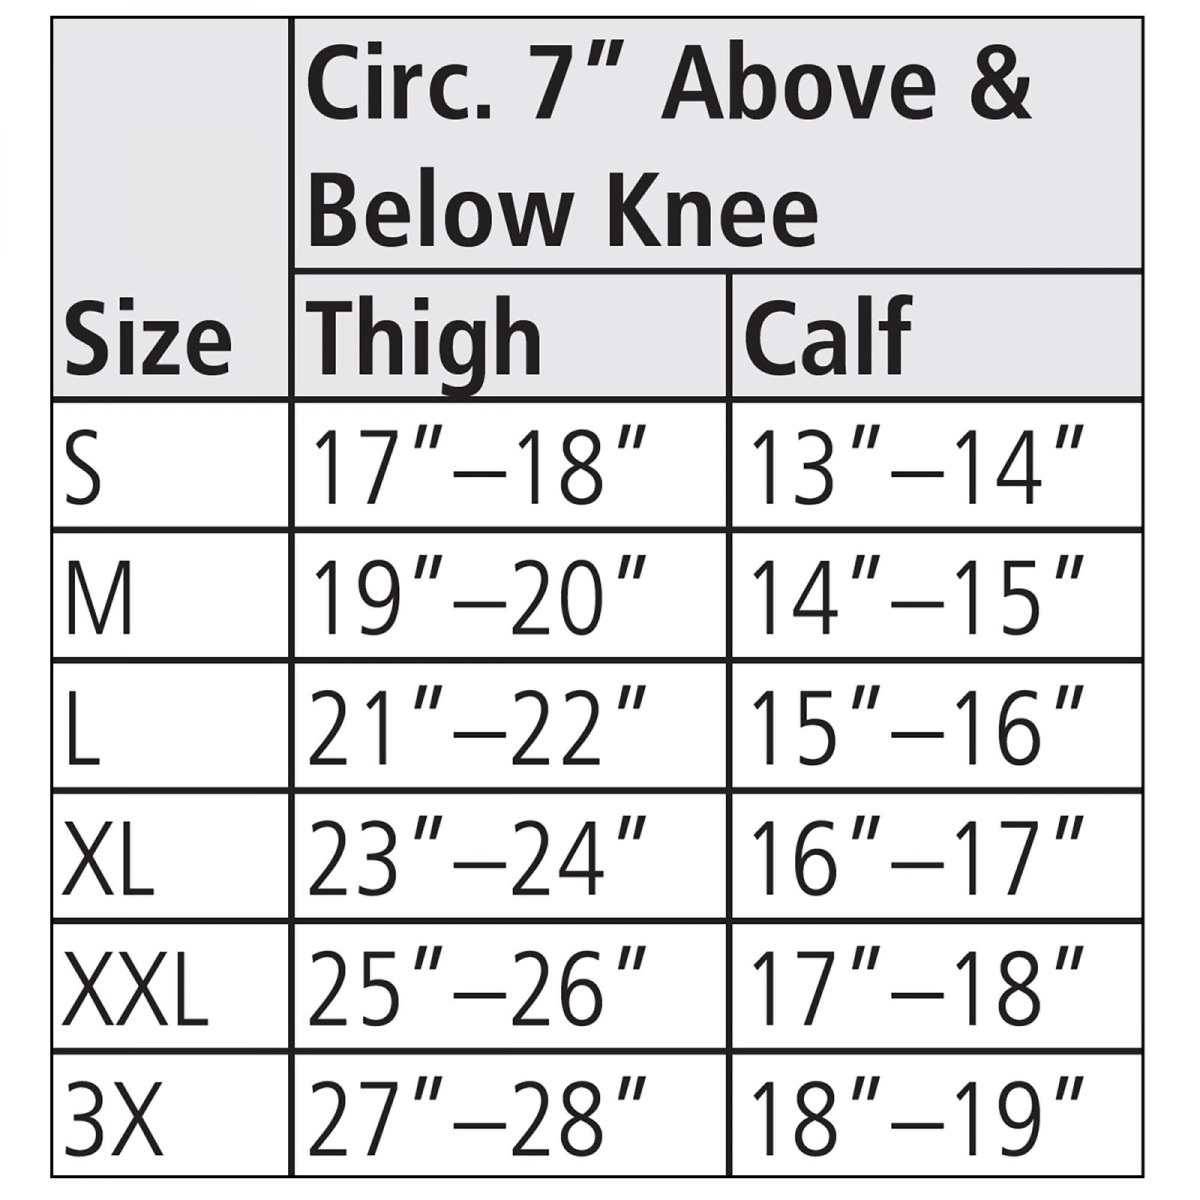 Hinged Knee Brace Size Chart